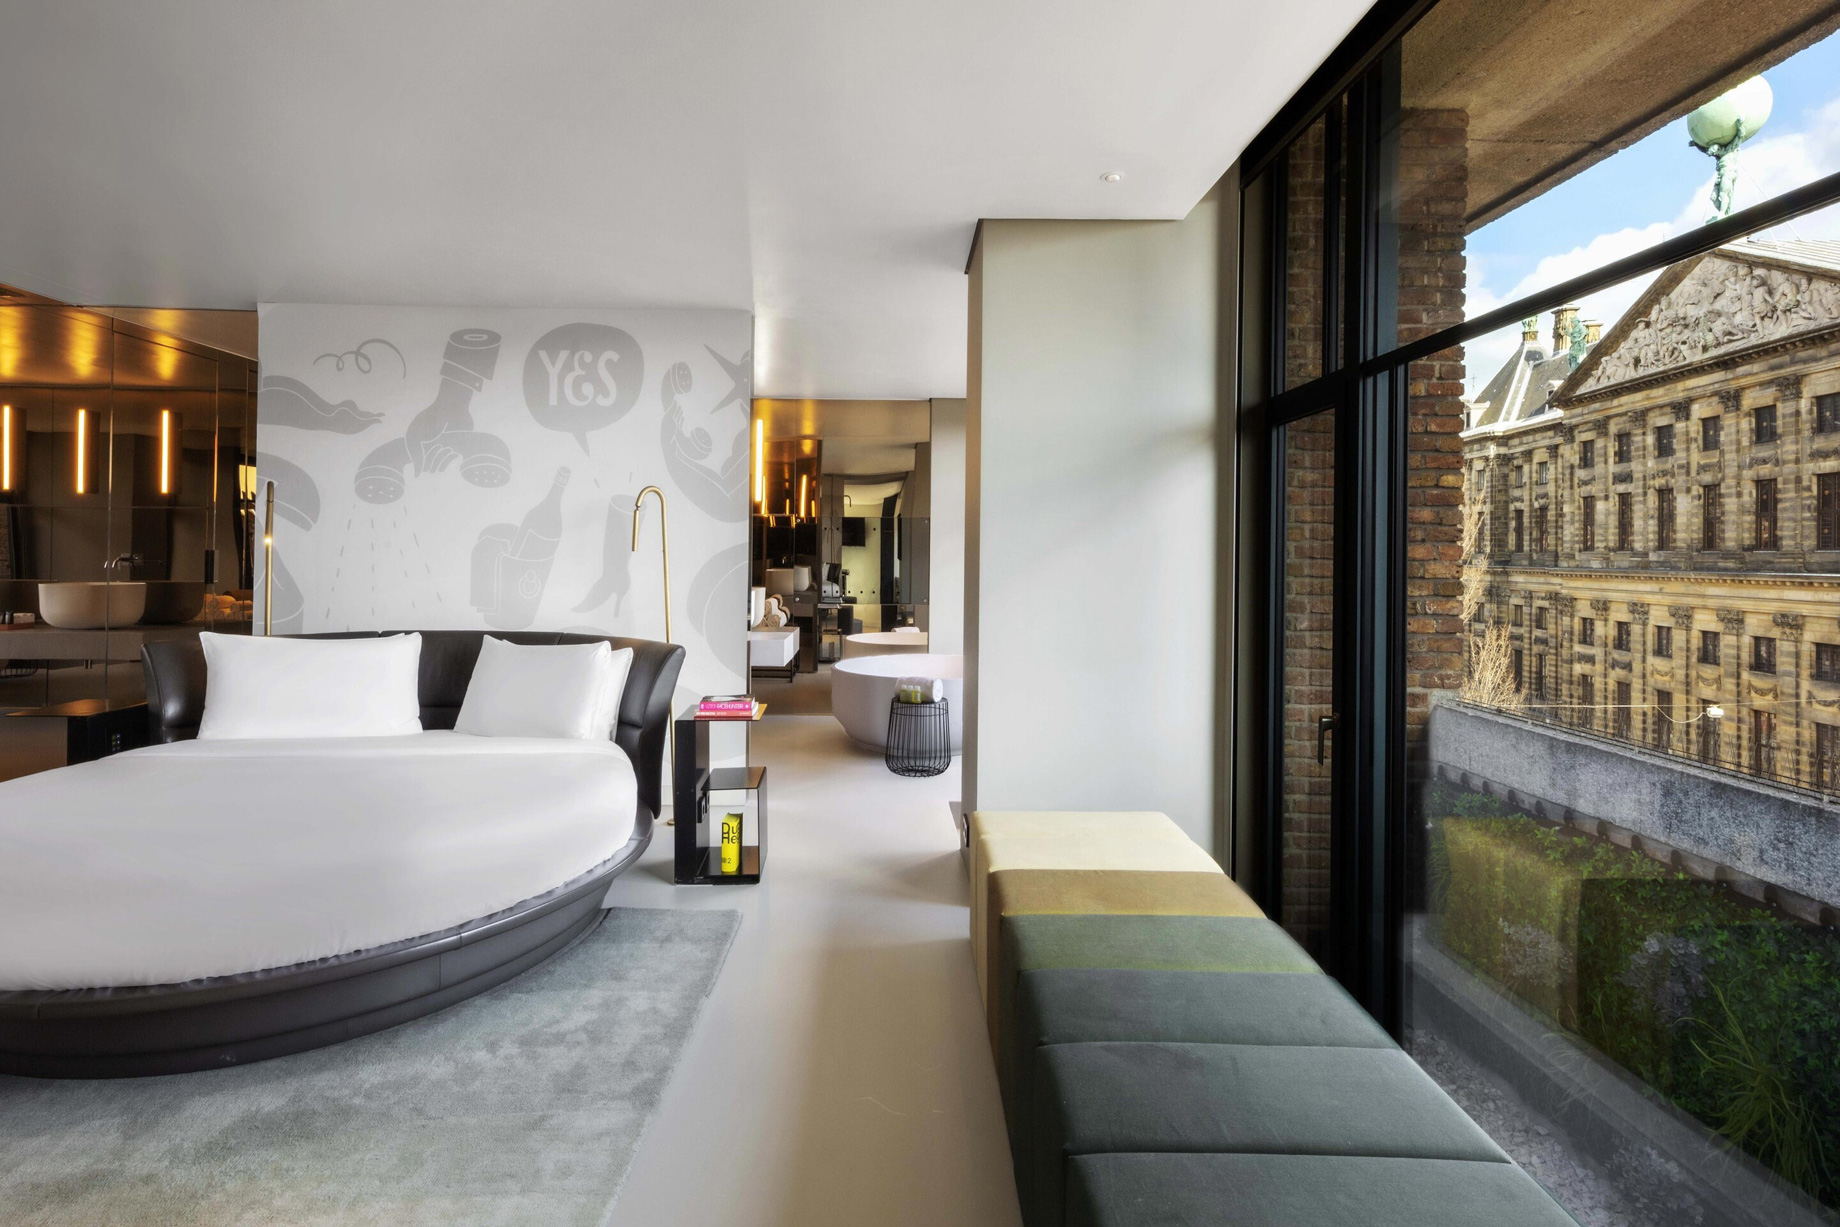 W Amsterdam Hotel – Amsterdam, Netherlands – WOW Exchange One Bedroom Studio View